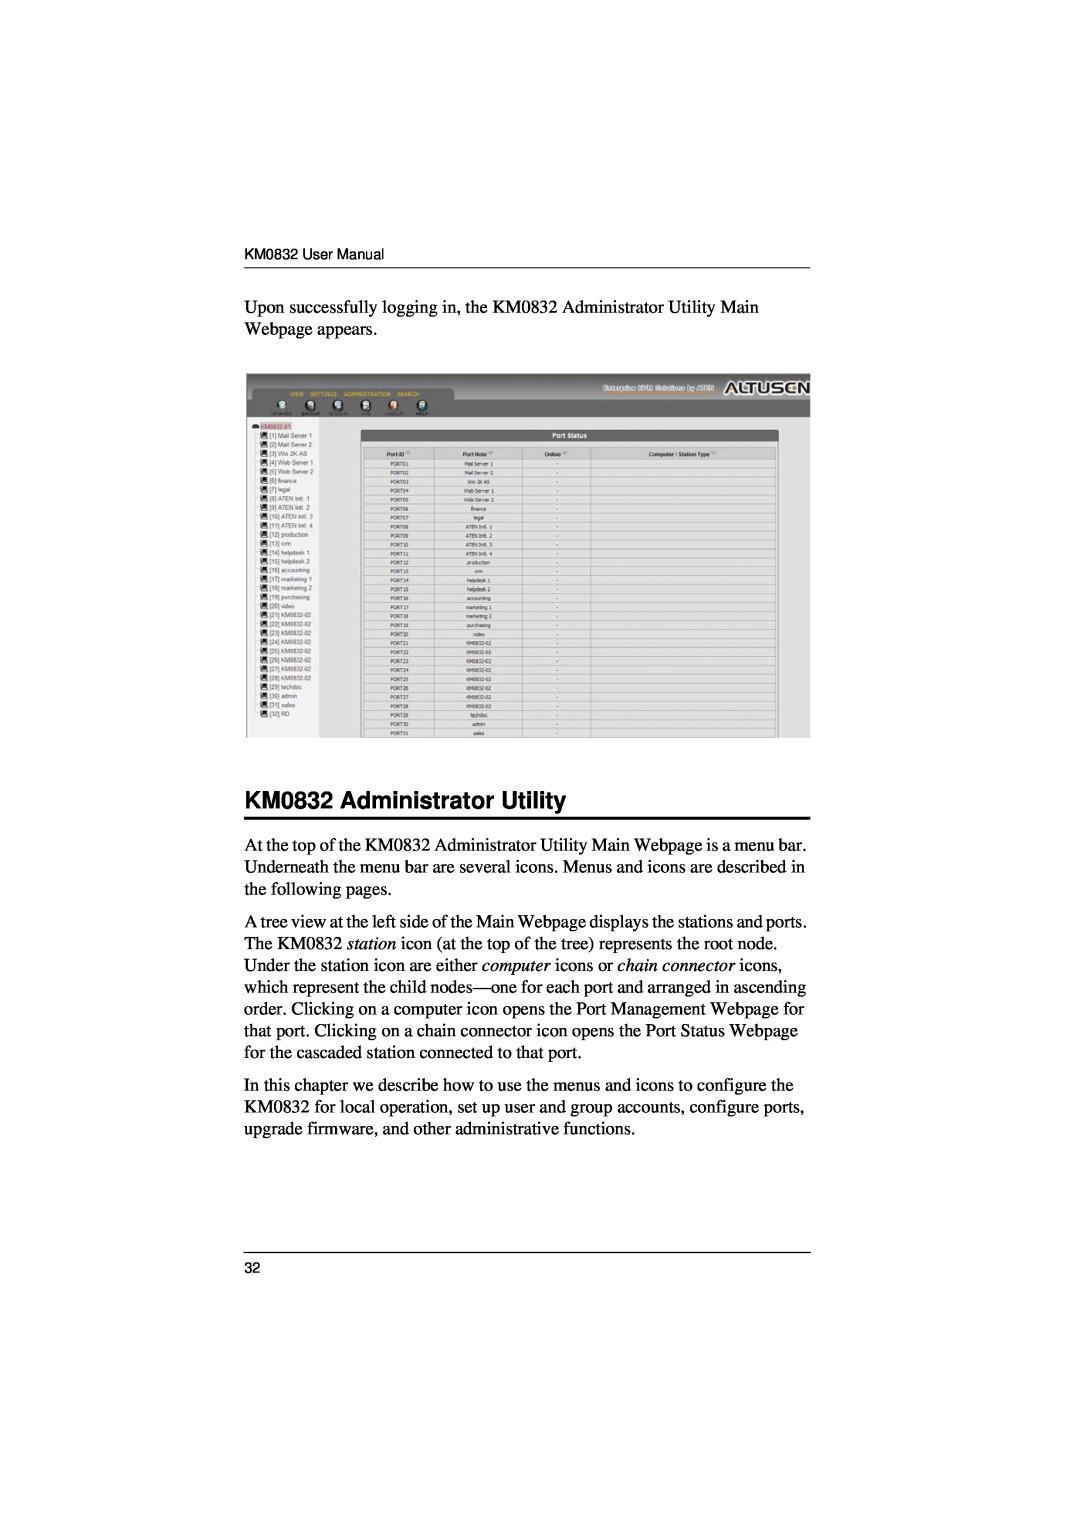 ATEN Technology user manual KM0832 Administrator Utility 